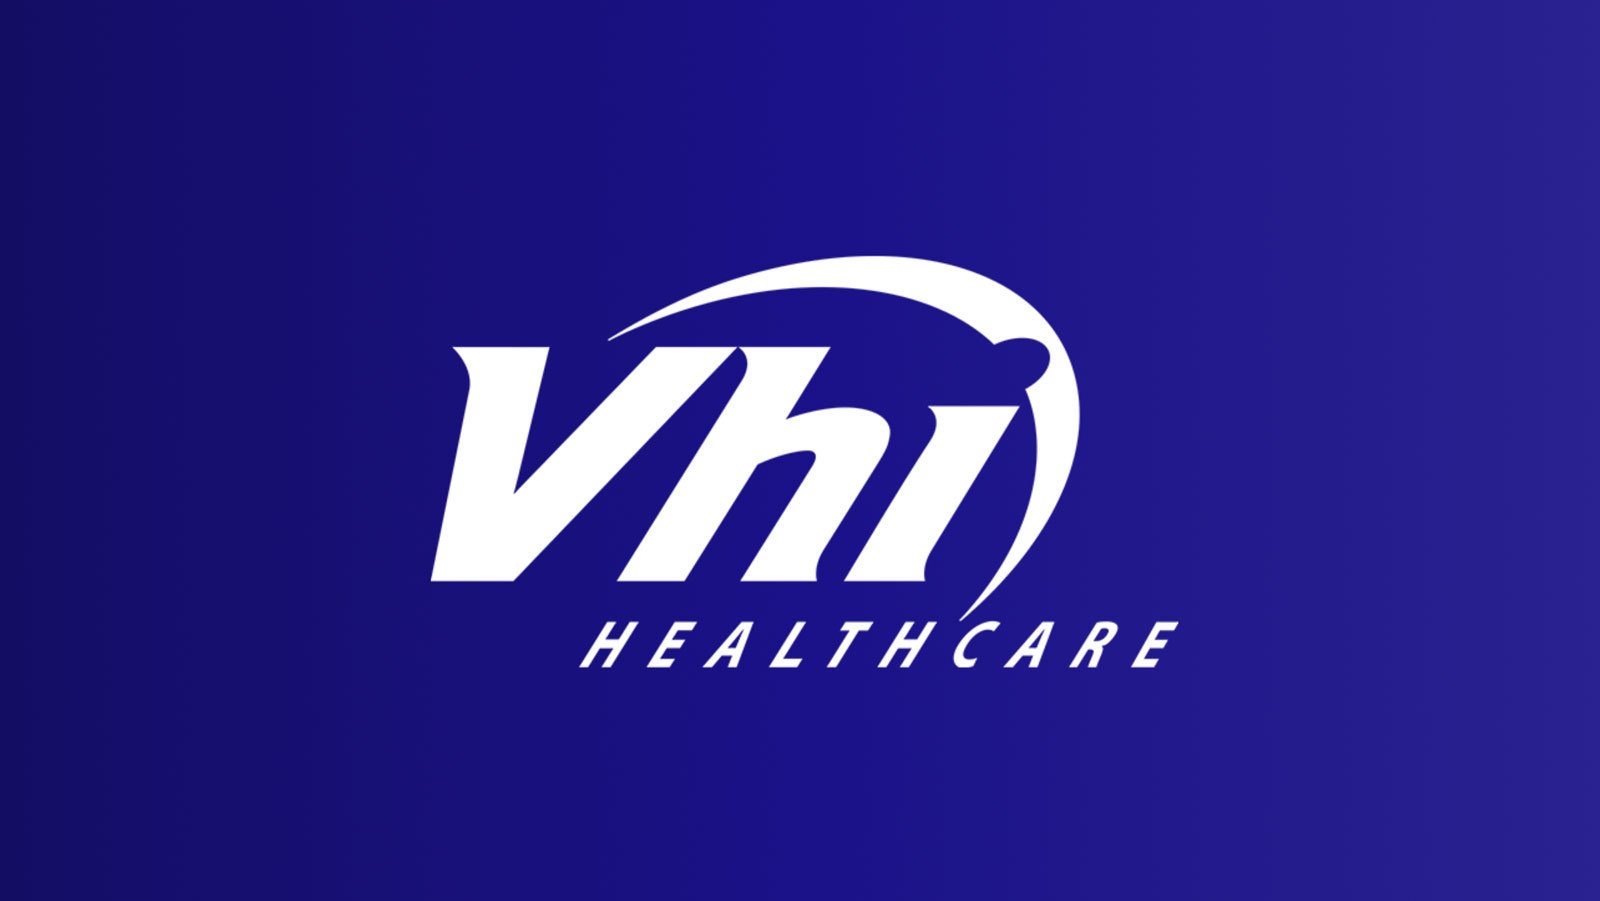 Vhi Healthcare<br/>Case Study